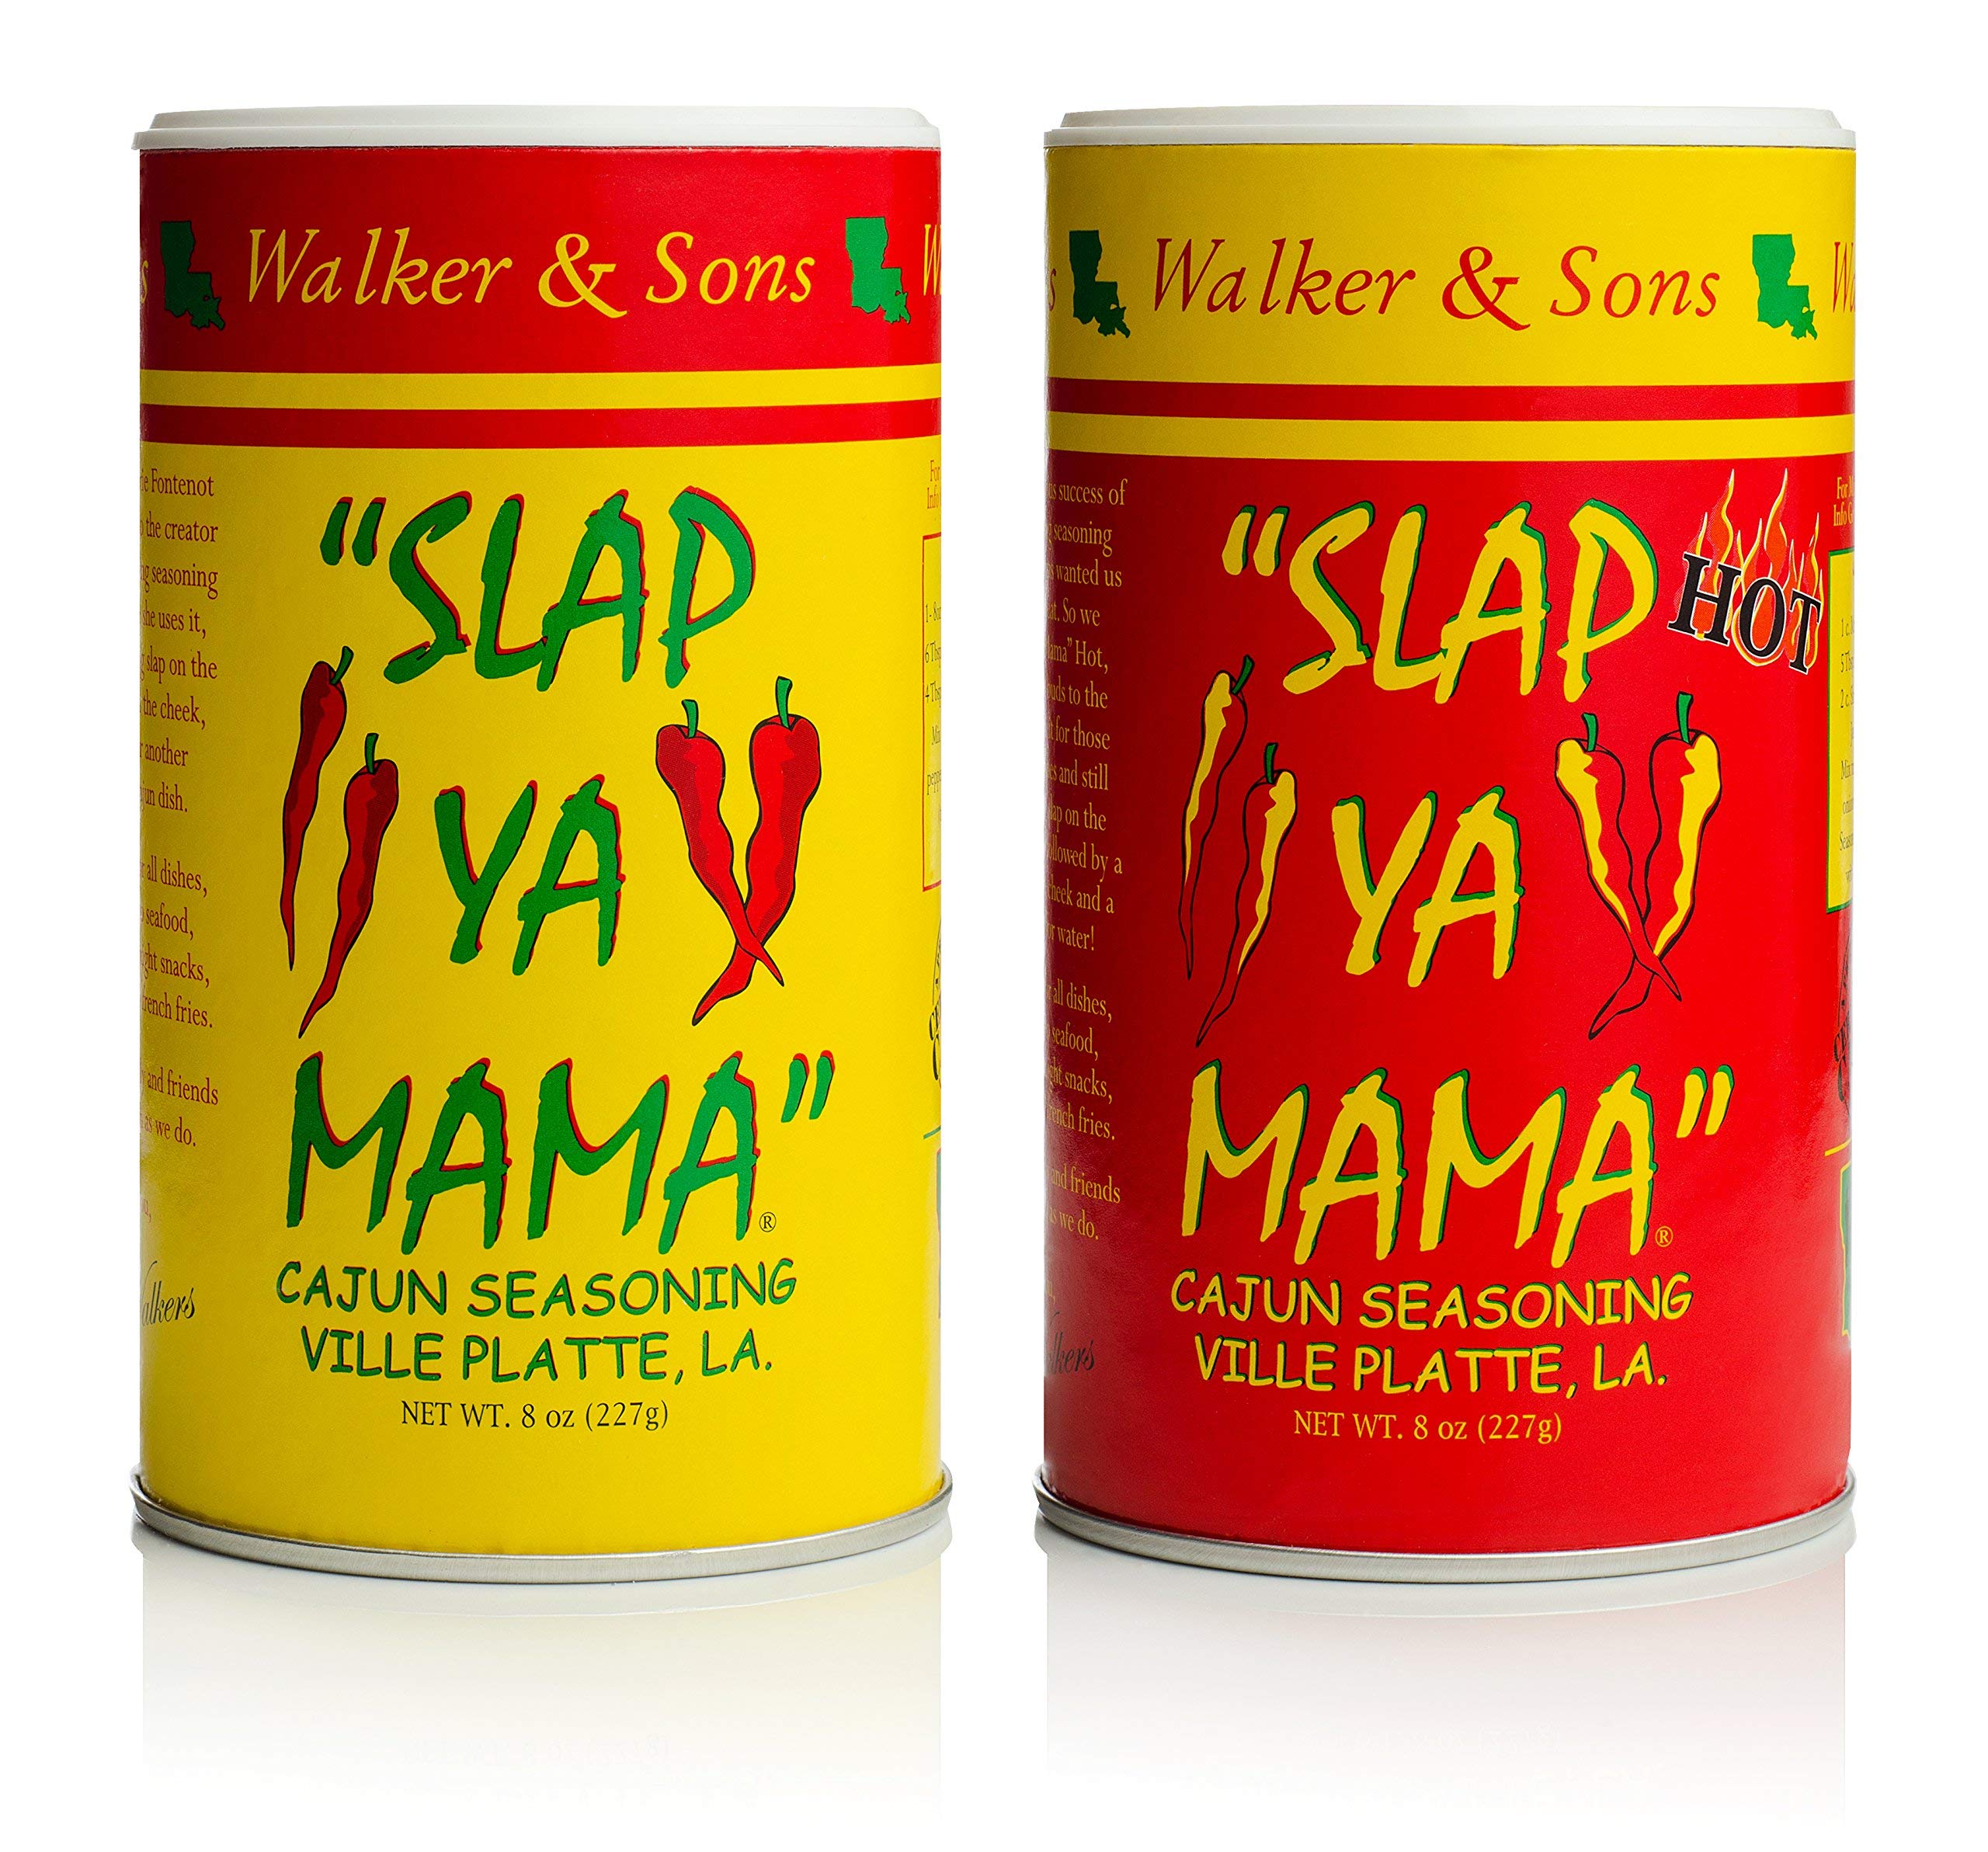 Slap Ya Mama Cajun Seasoning White Pepper Blend - Pinconning